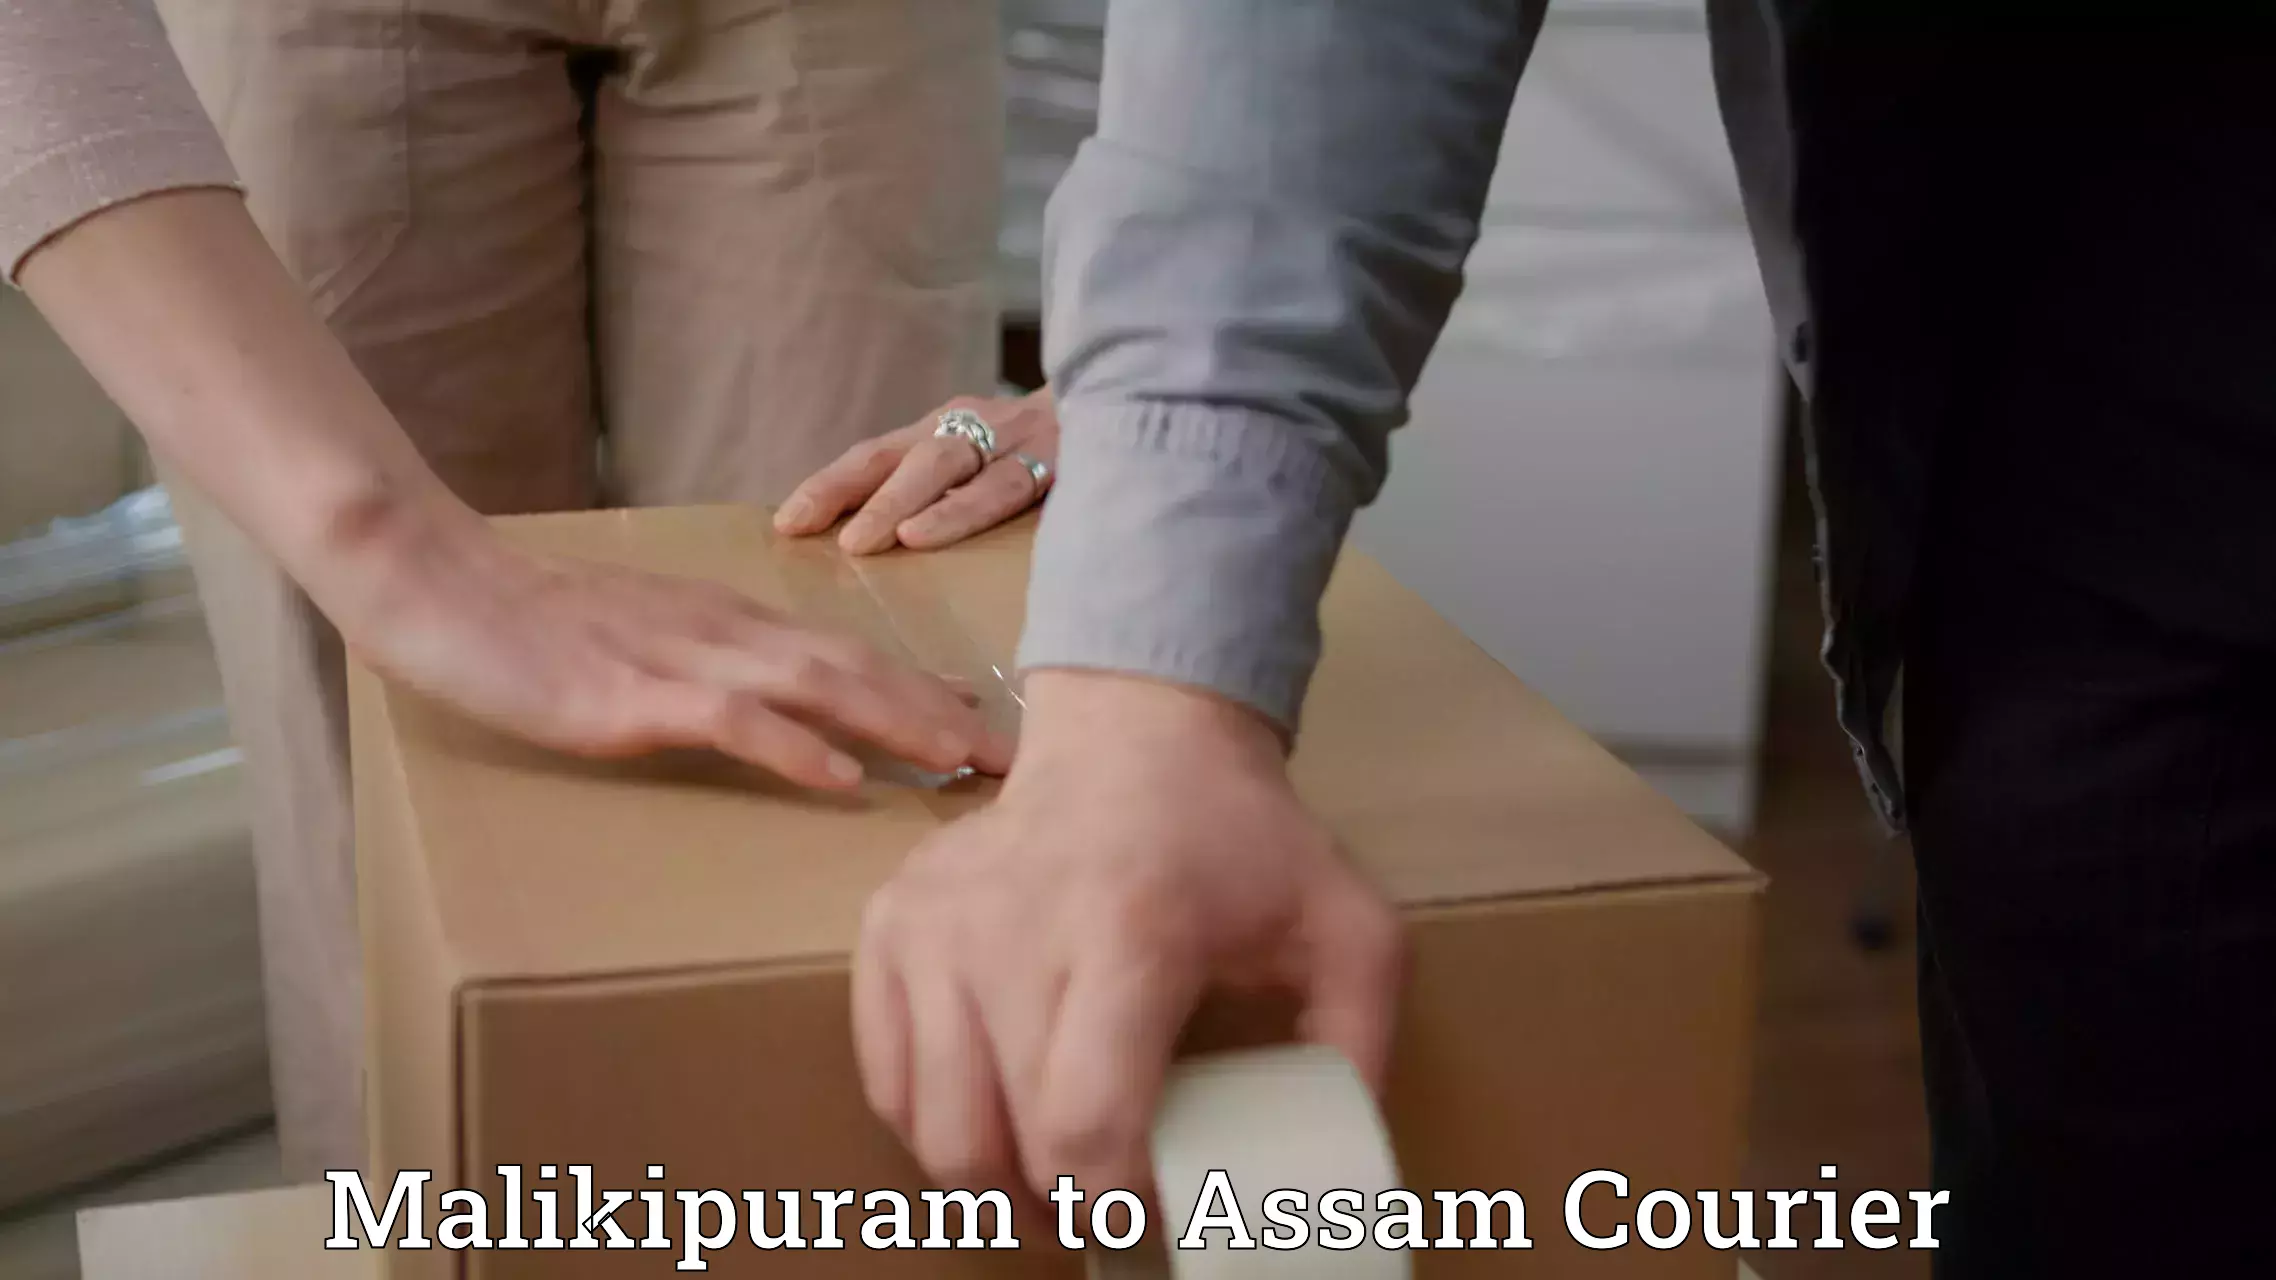 Courier insurance Malikipuram to Mayang